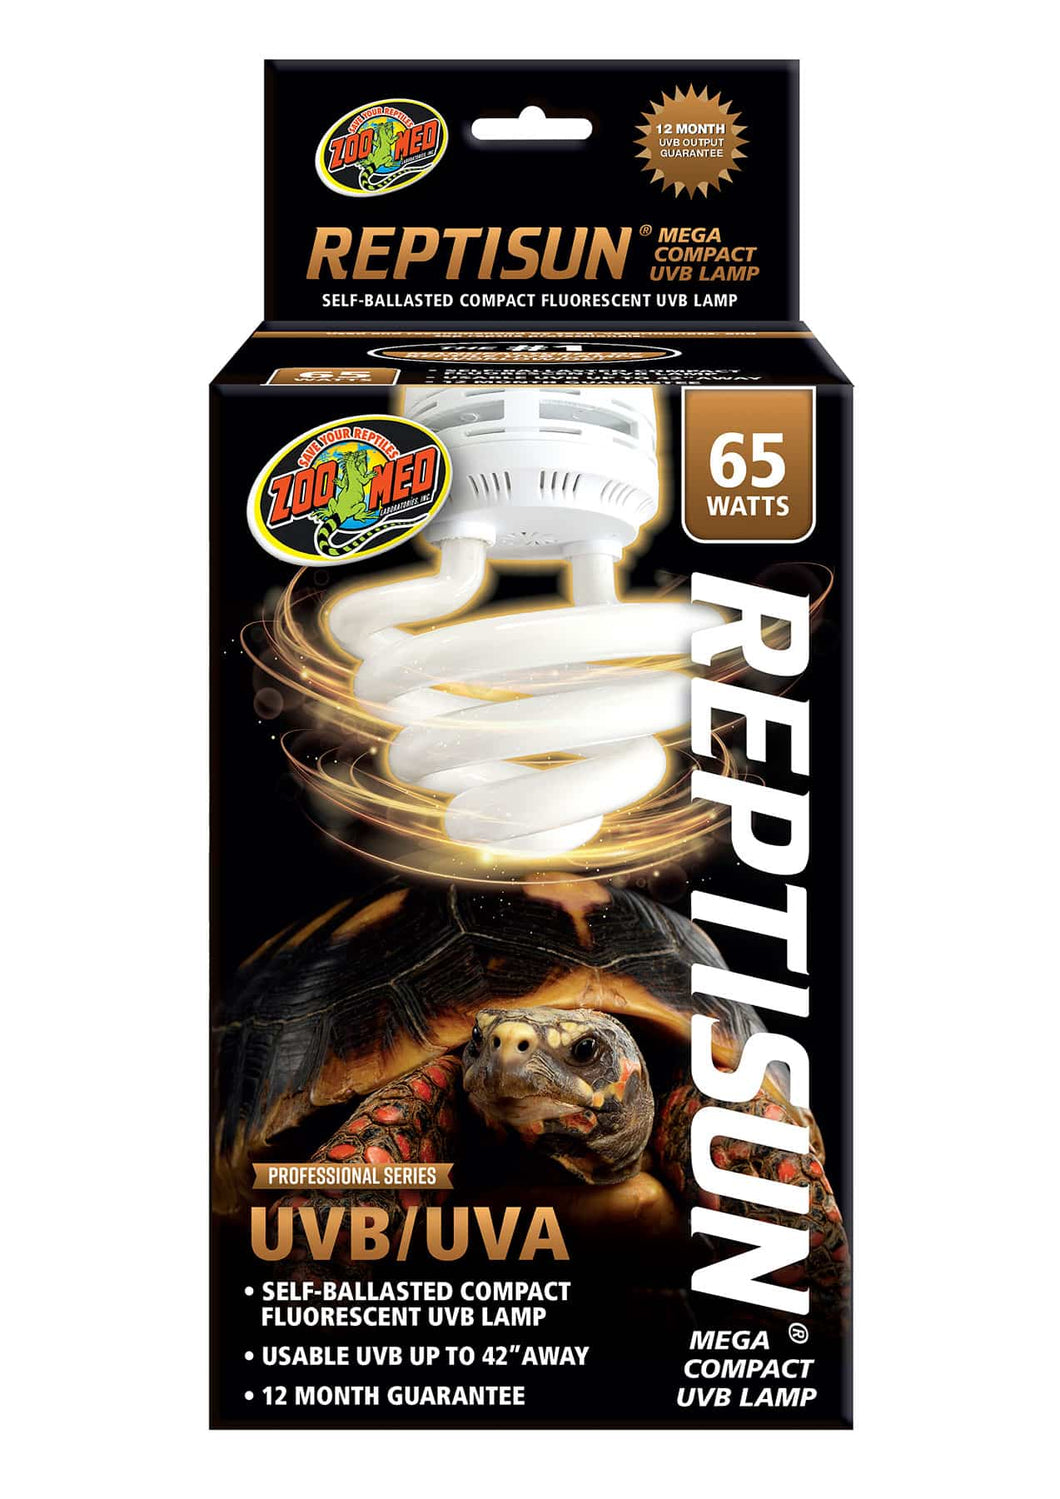 Reptisun Mega Compact UVB/UVA with visible light